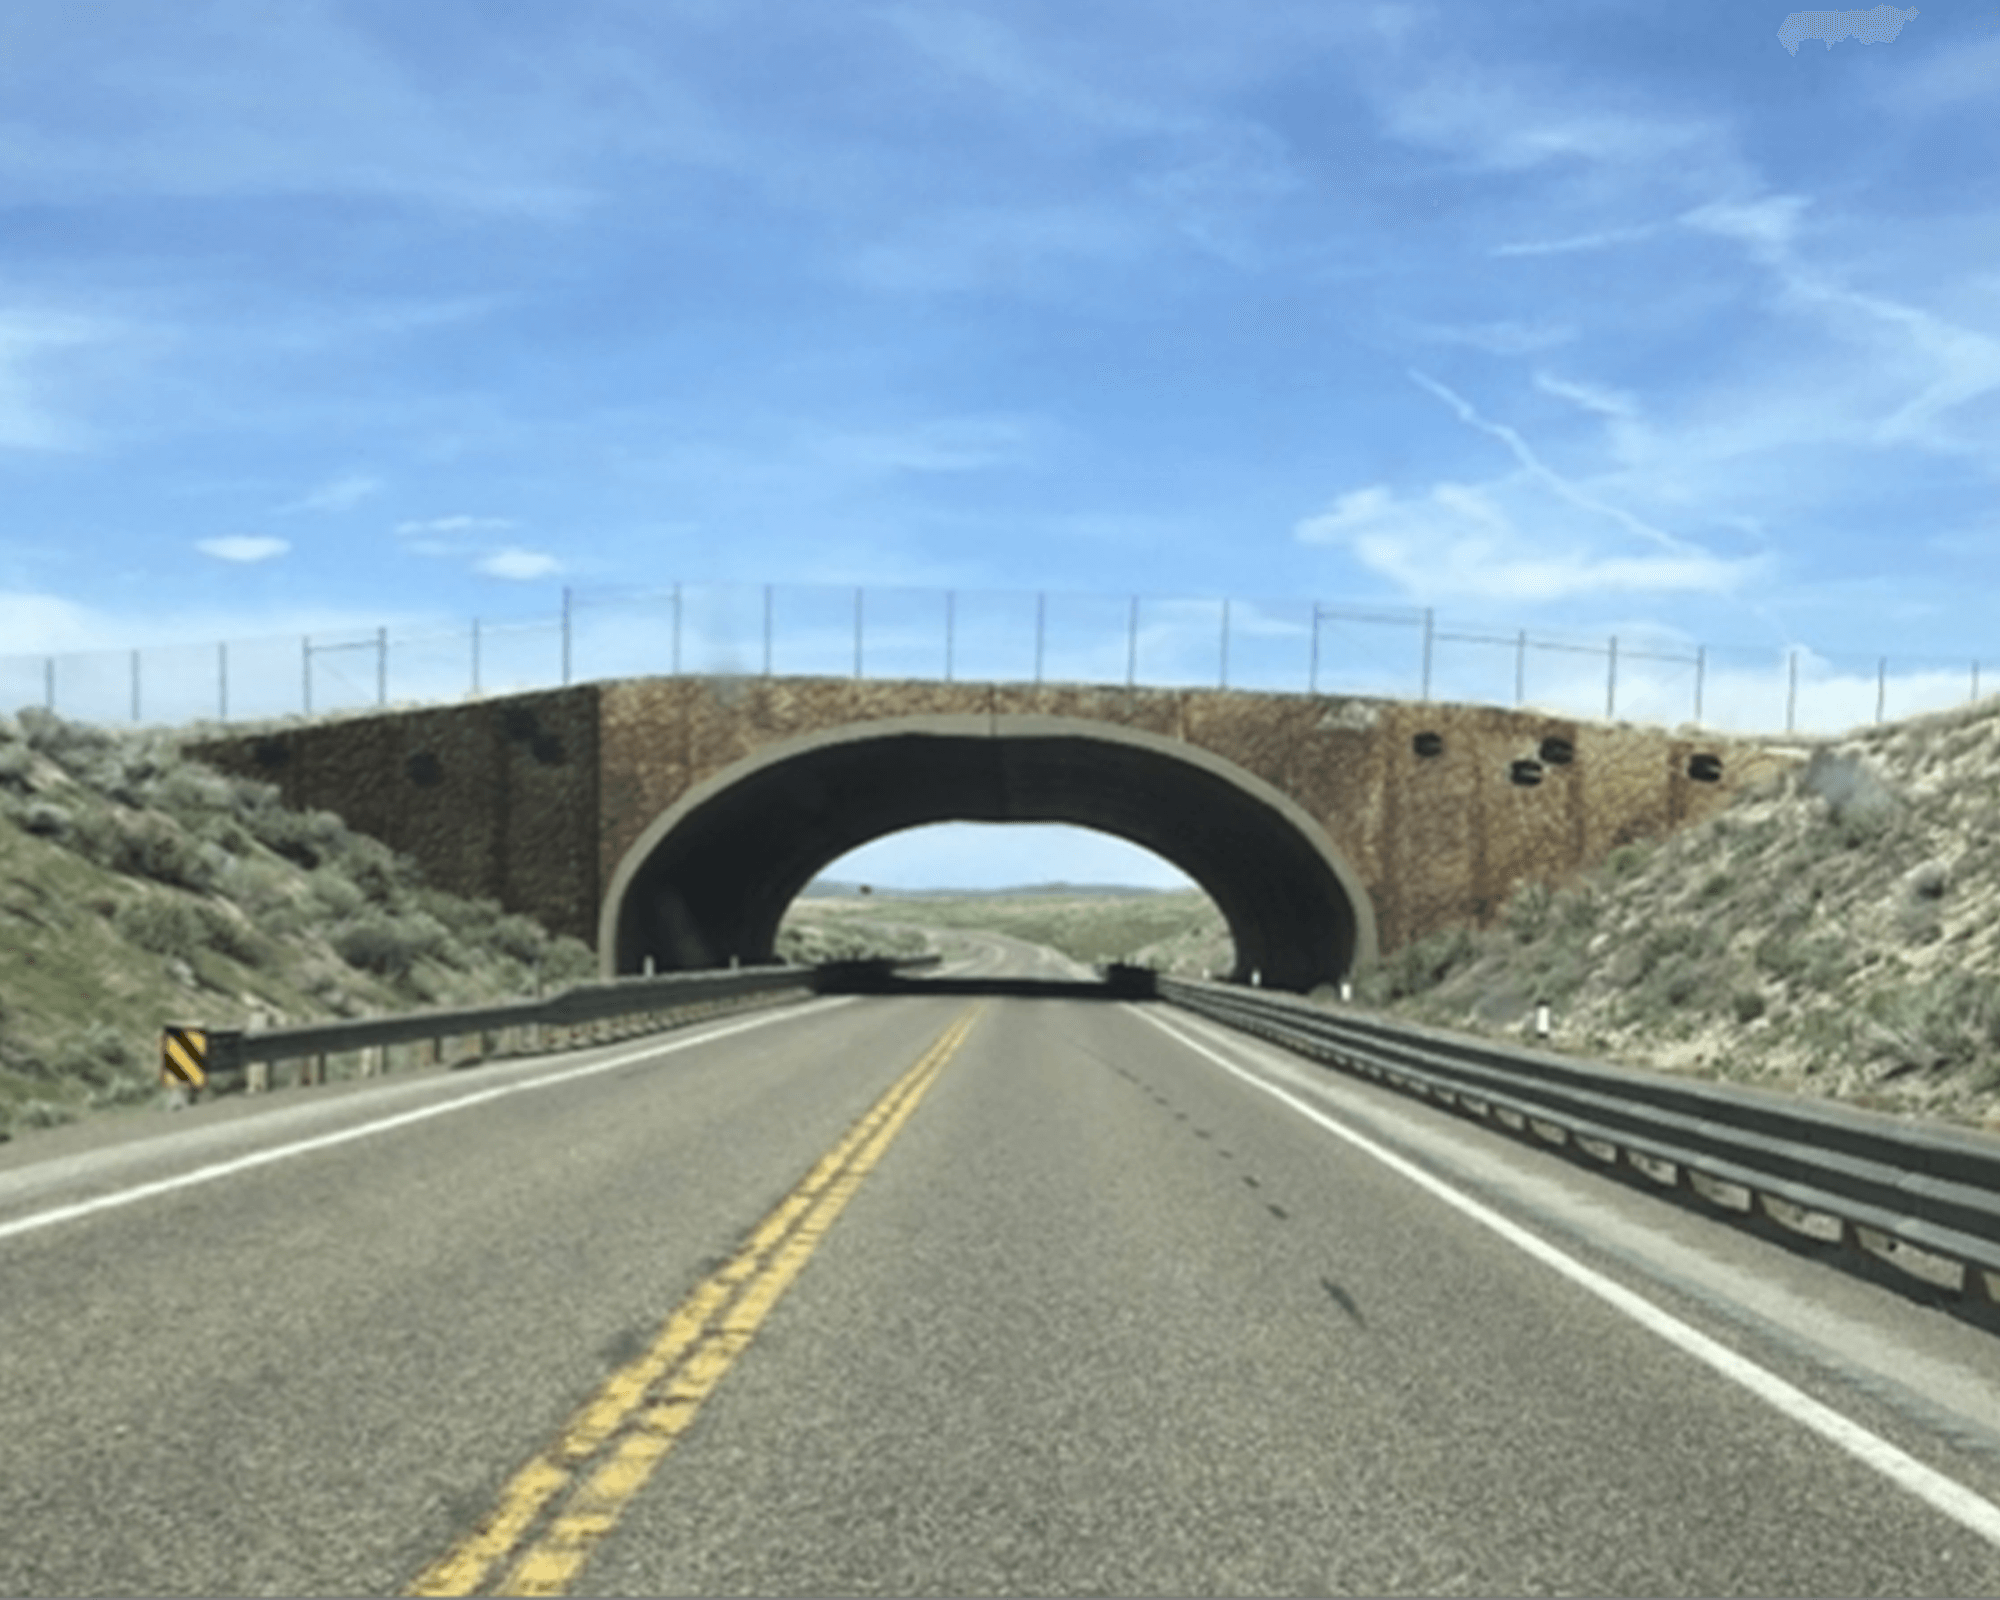 wildlife infrastructure including a wildlife crossing overpass